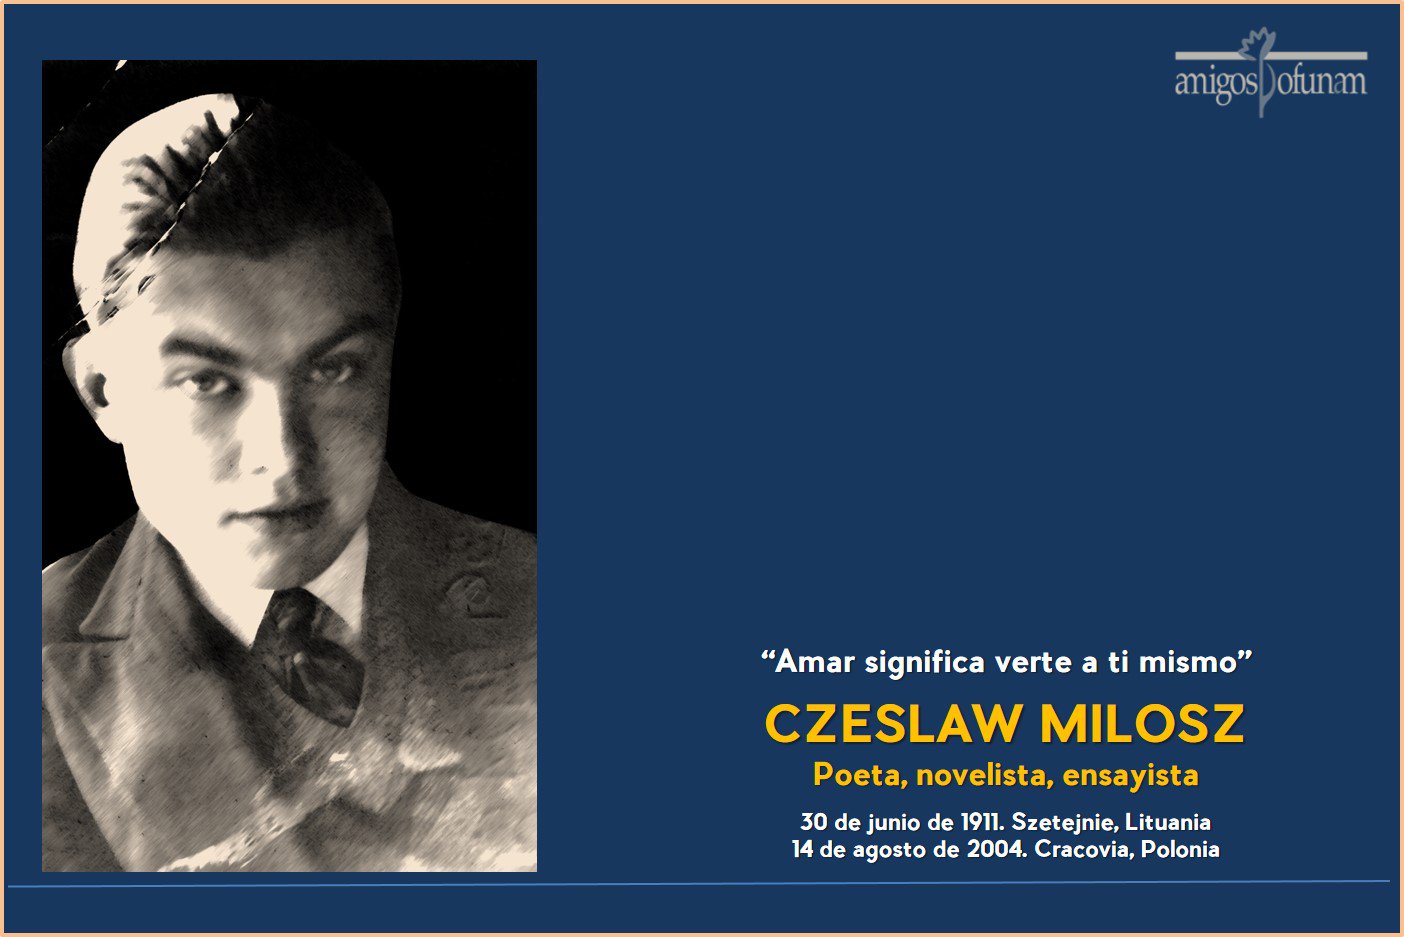 De los primeros poemas de Ceszlaw Milosz